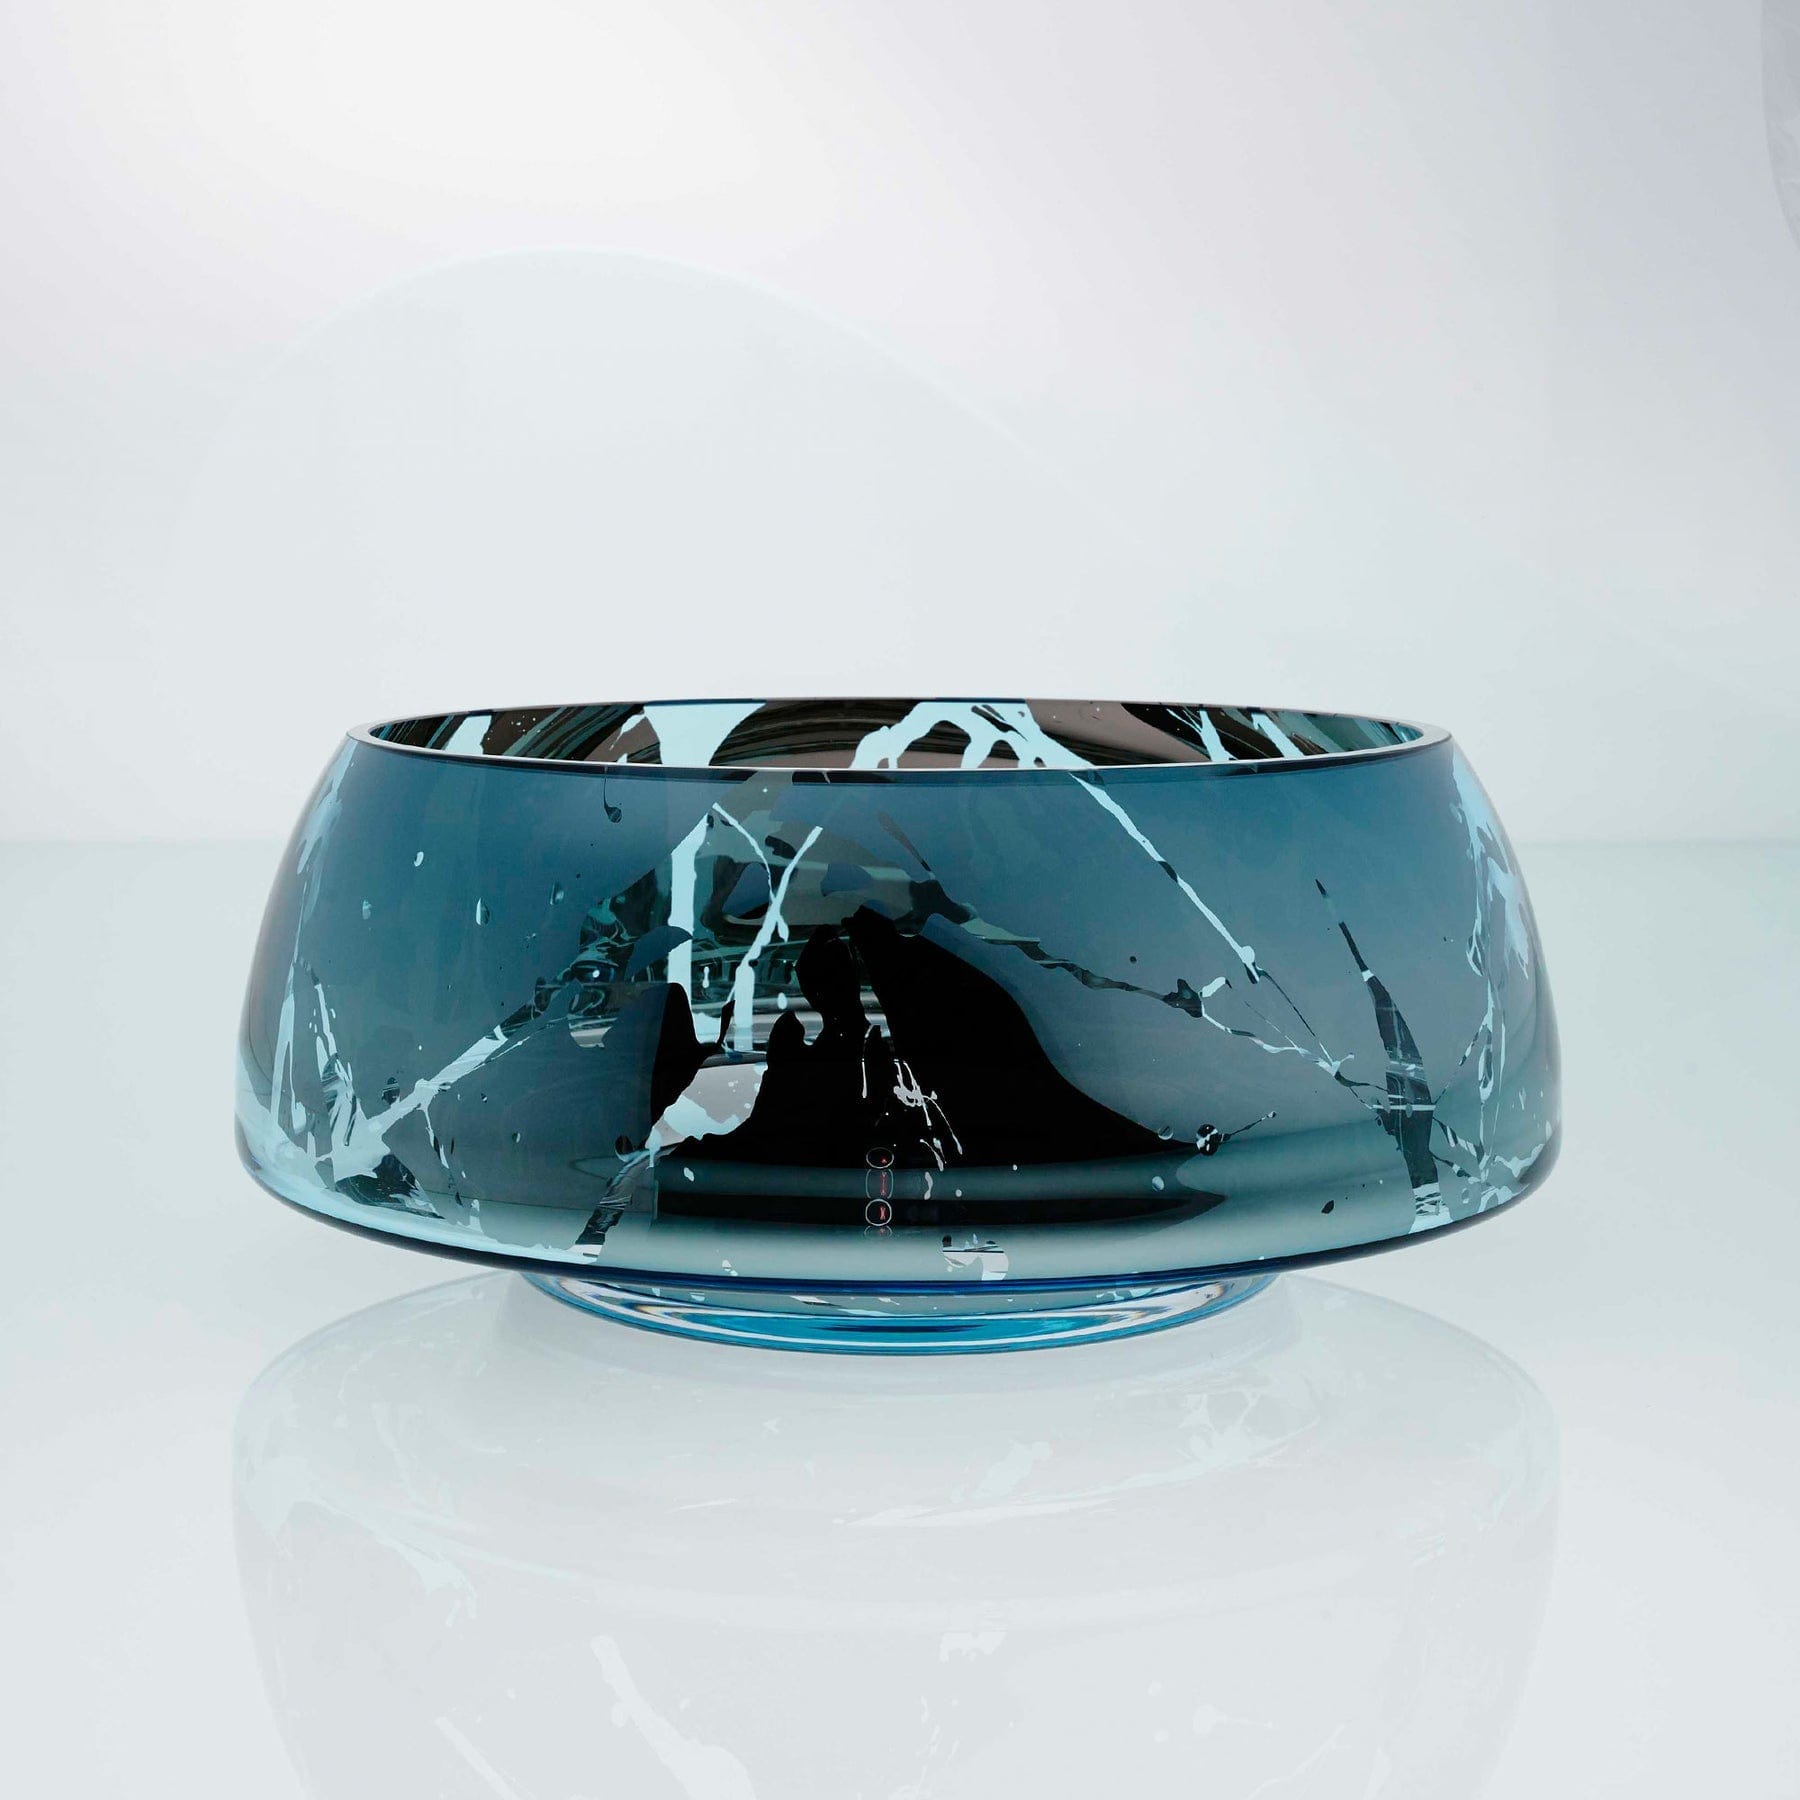 An & Angel, Grand Glass Bowl, Teal Ext. / Mirror Transparent Int